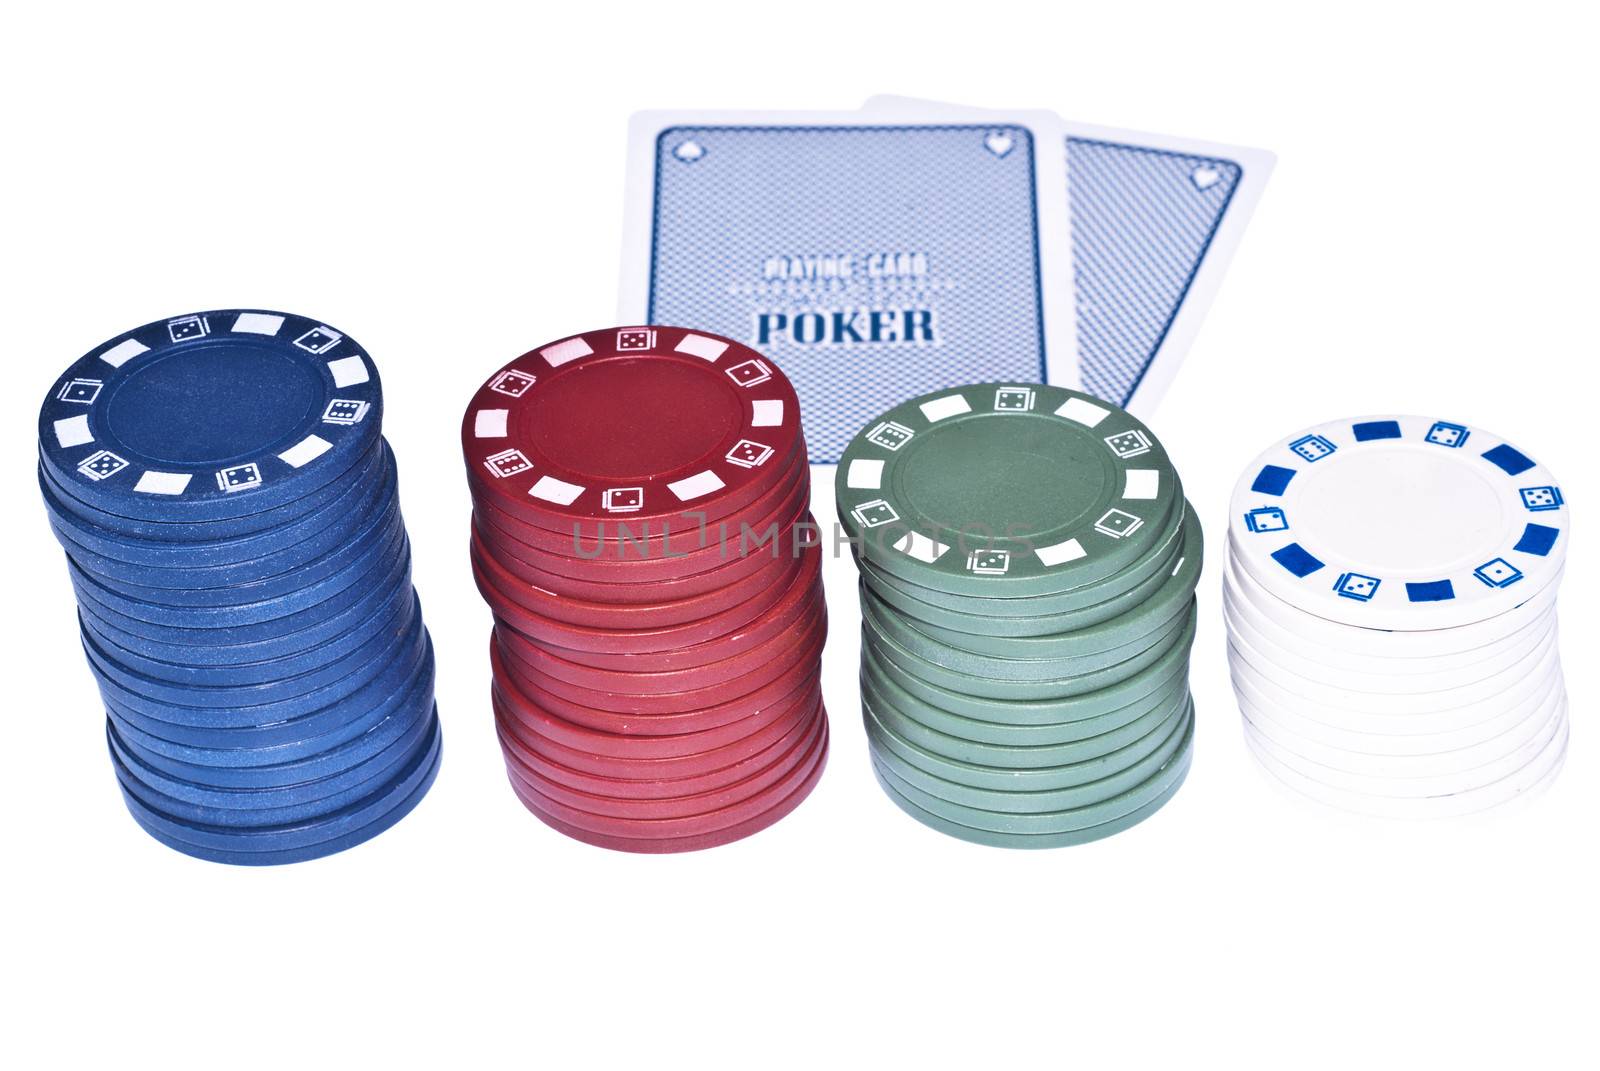 cards with poker chips by gandolfocannatella